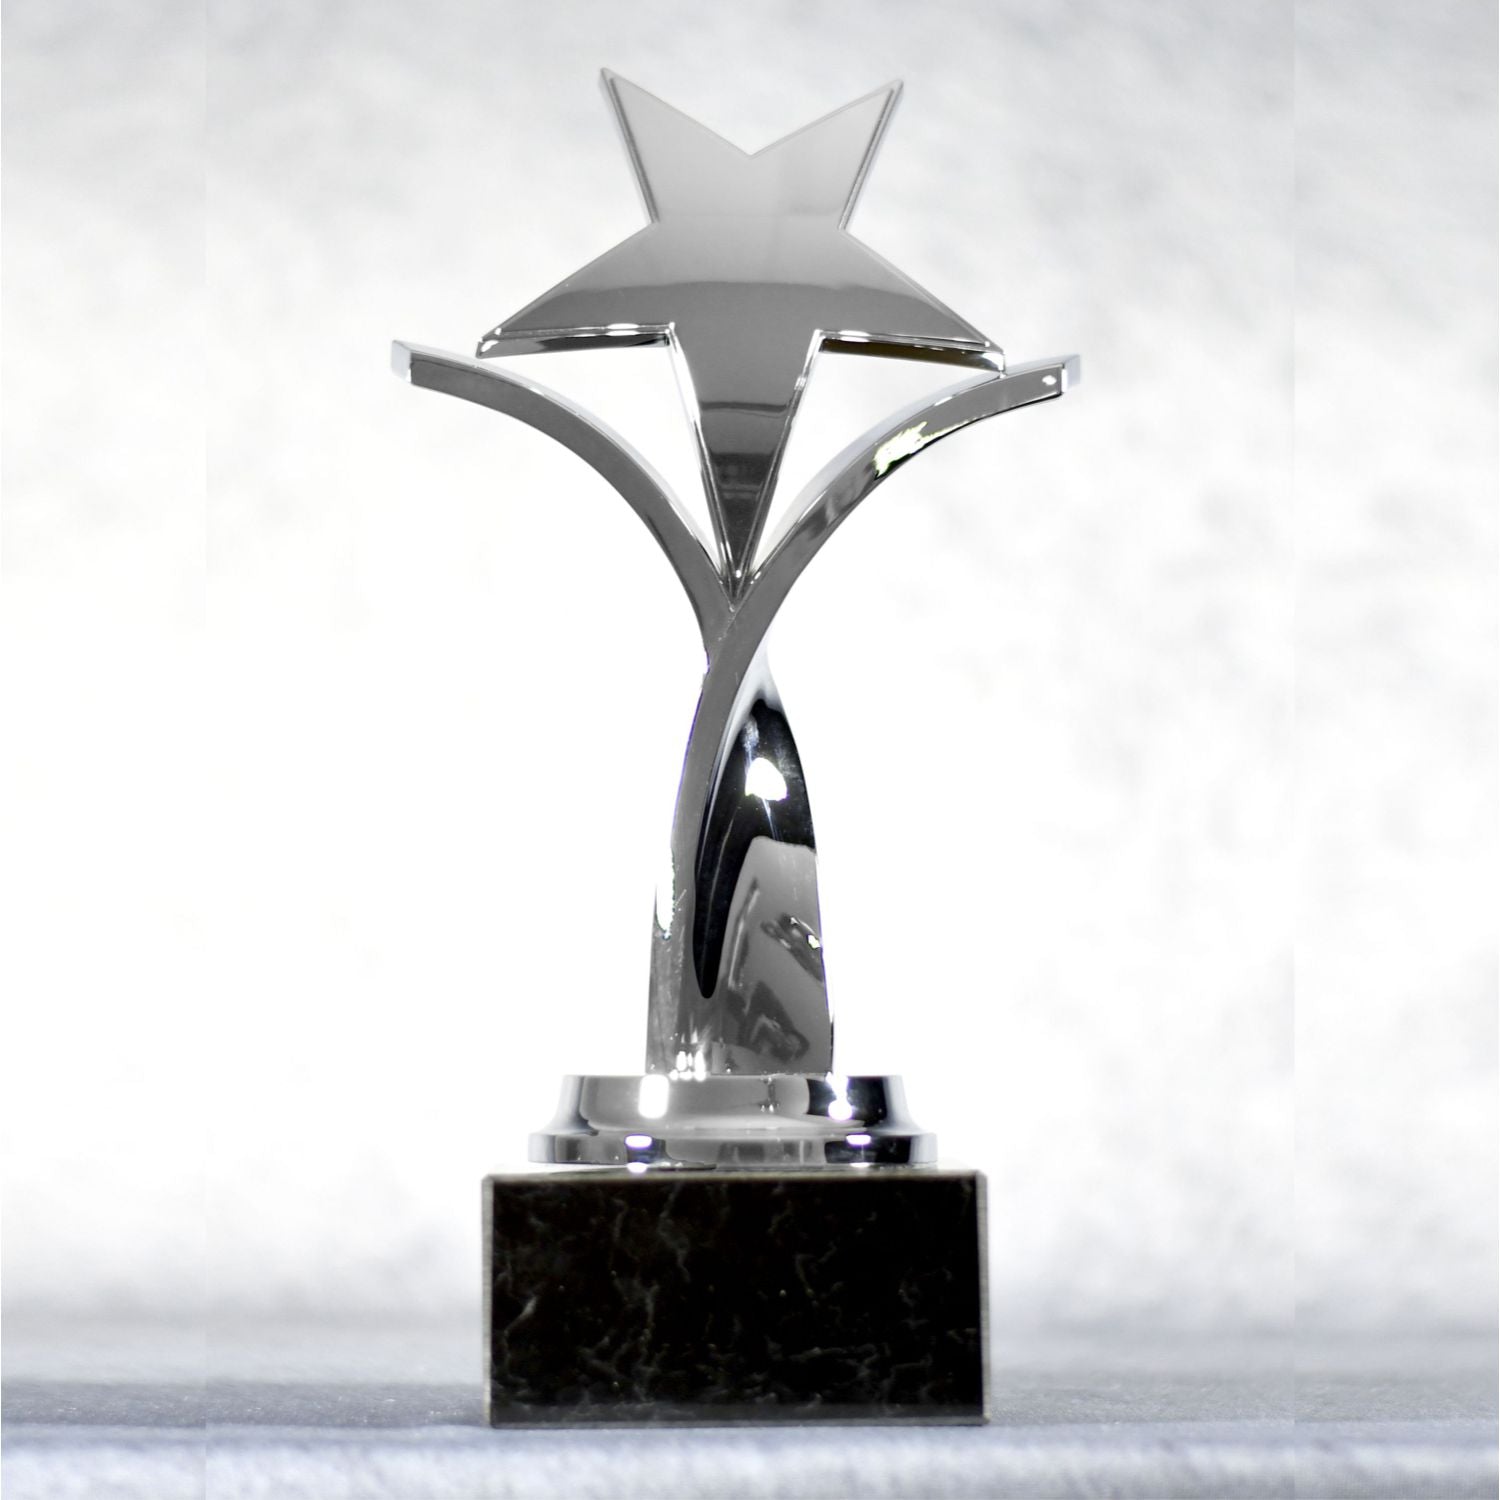 Twisting Star On Black Marble Base, Gold, Silver, Bronze | Alliance Awards LLC.